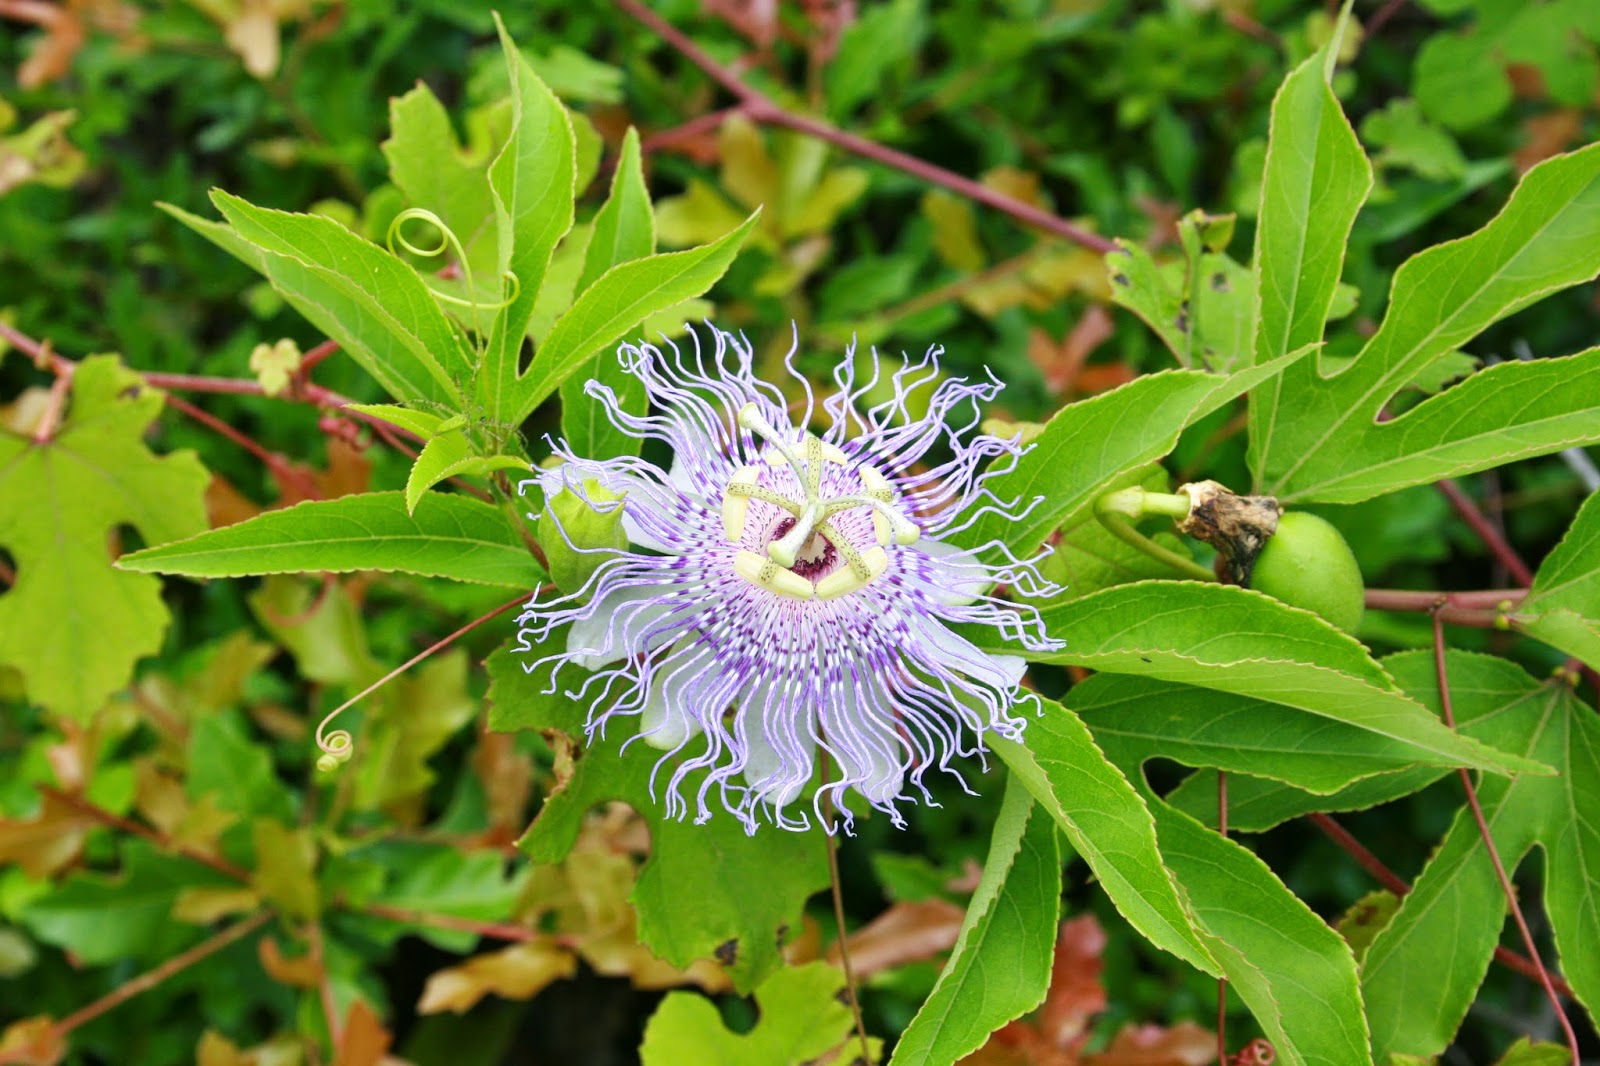 Native Florida Wildflowers: Purple passionvine - Passiflora incarnata Purple Flowers That Grow In Florida